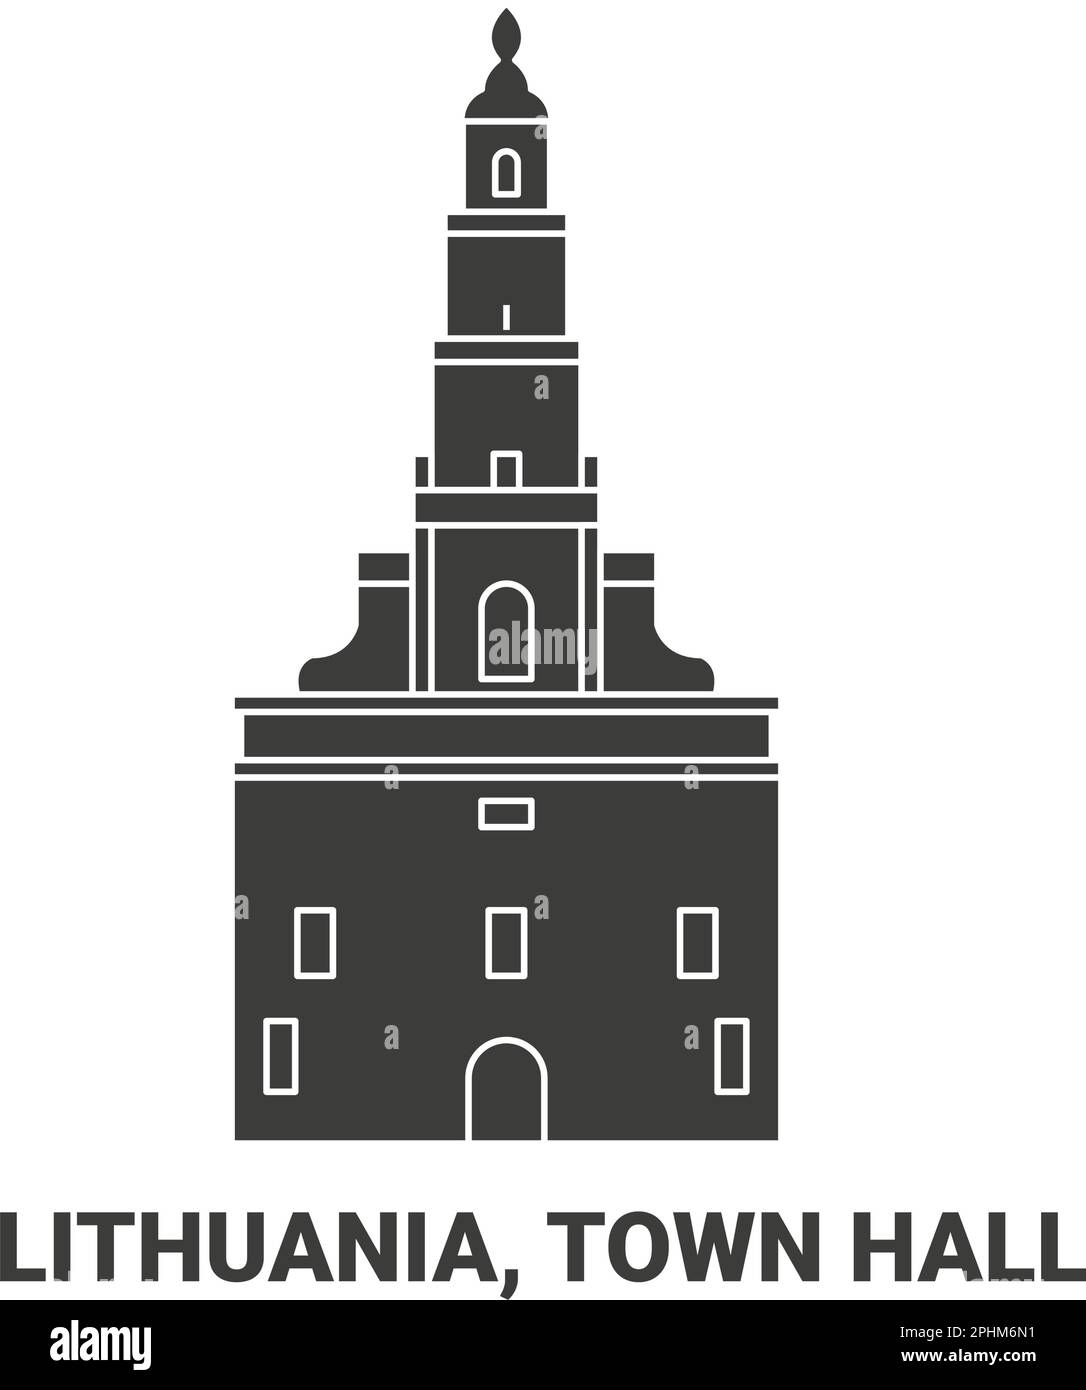 Lithuania, Town Hall, travel landmark vector illustration Stock Vector